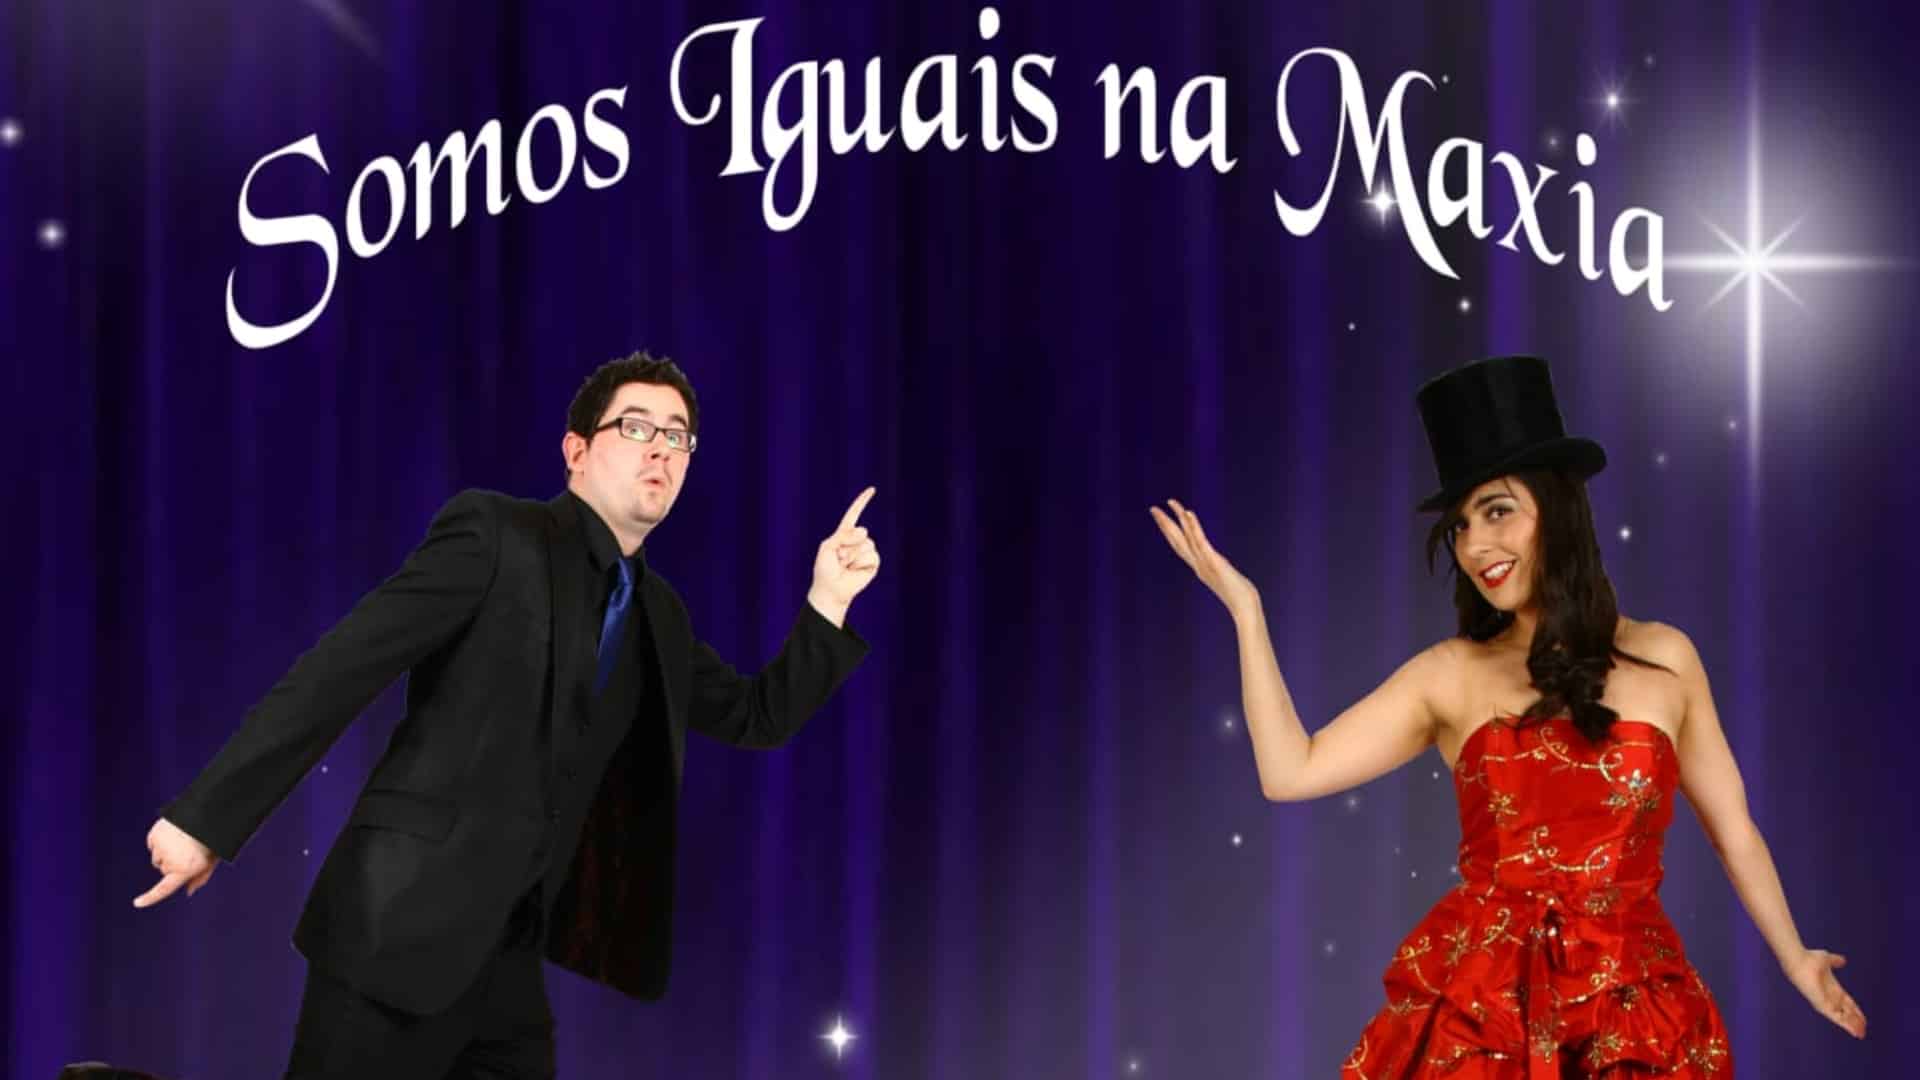 Imagen promocional del espectáculo "Somos Iguais na Maxia" de Ian & Elisa | CONCELLO DE PONTECESO